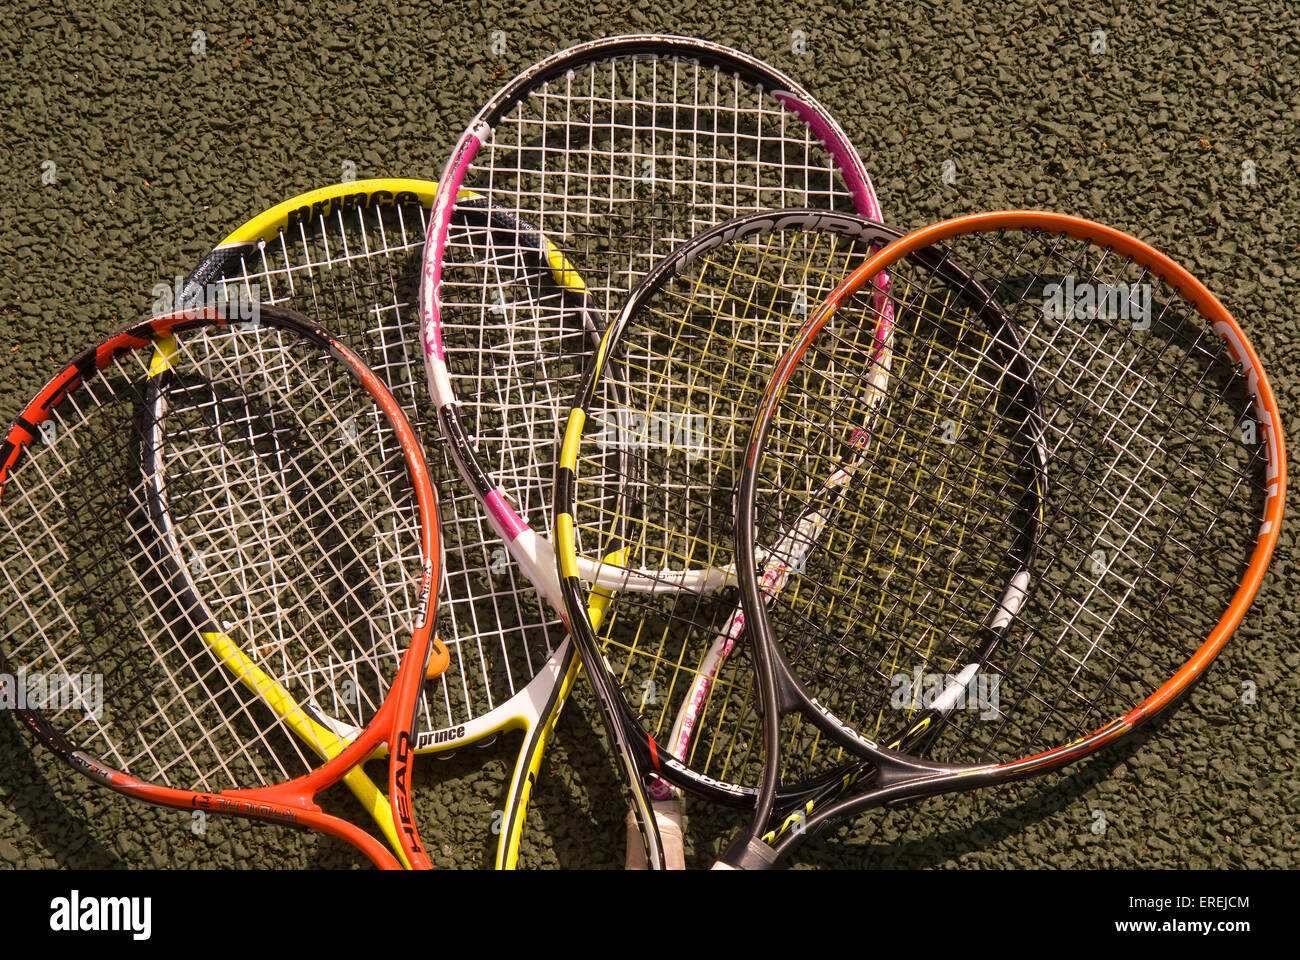 Assortment of tennis rackets laying on tennis court, Headley, Hampshire, UK. Stock Photo